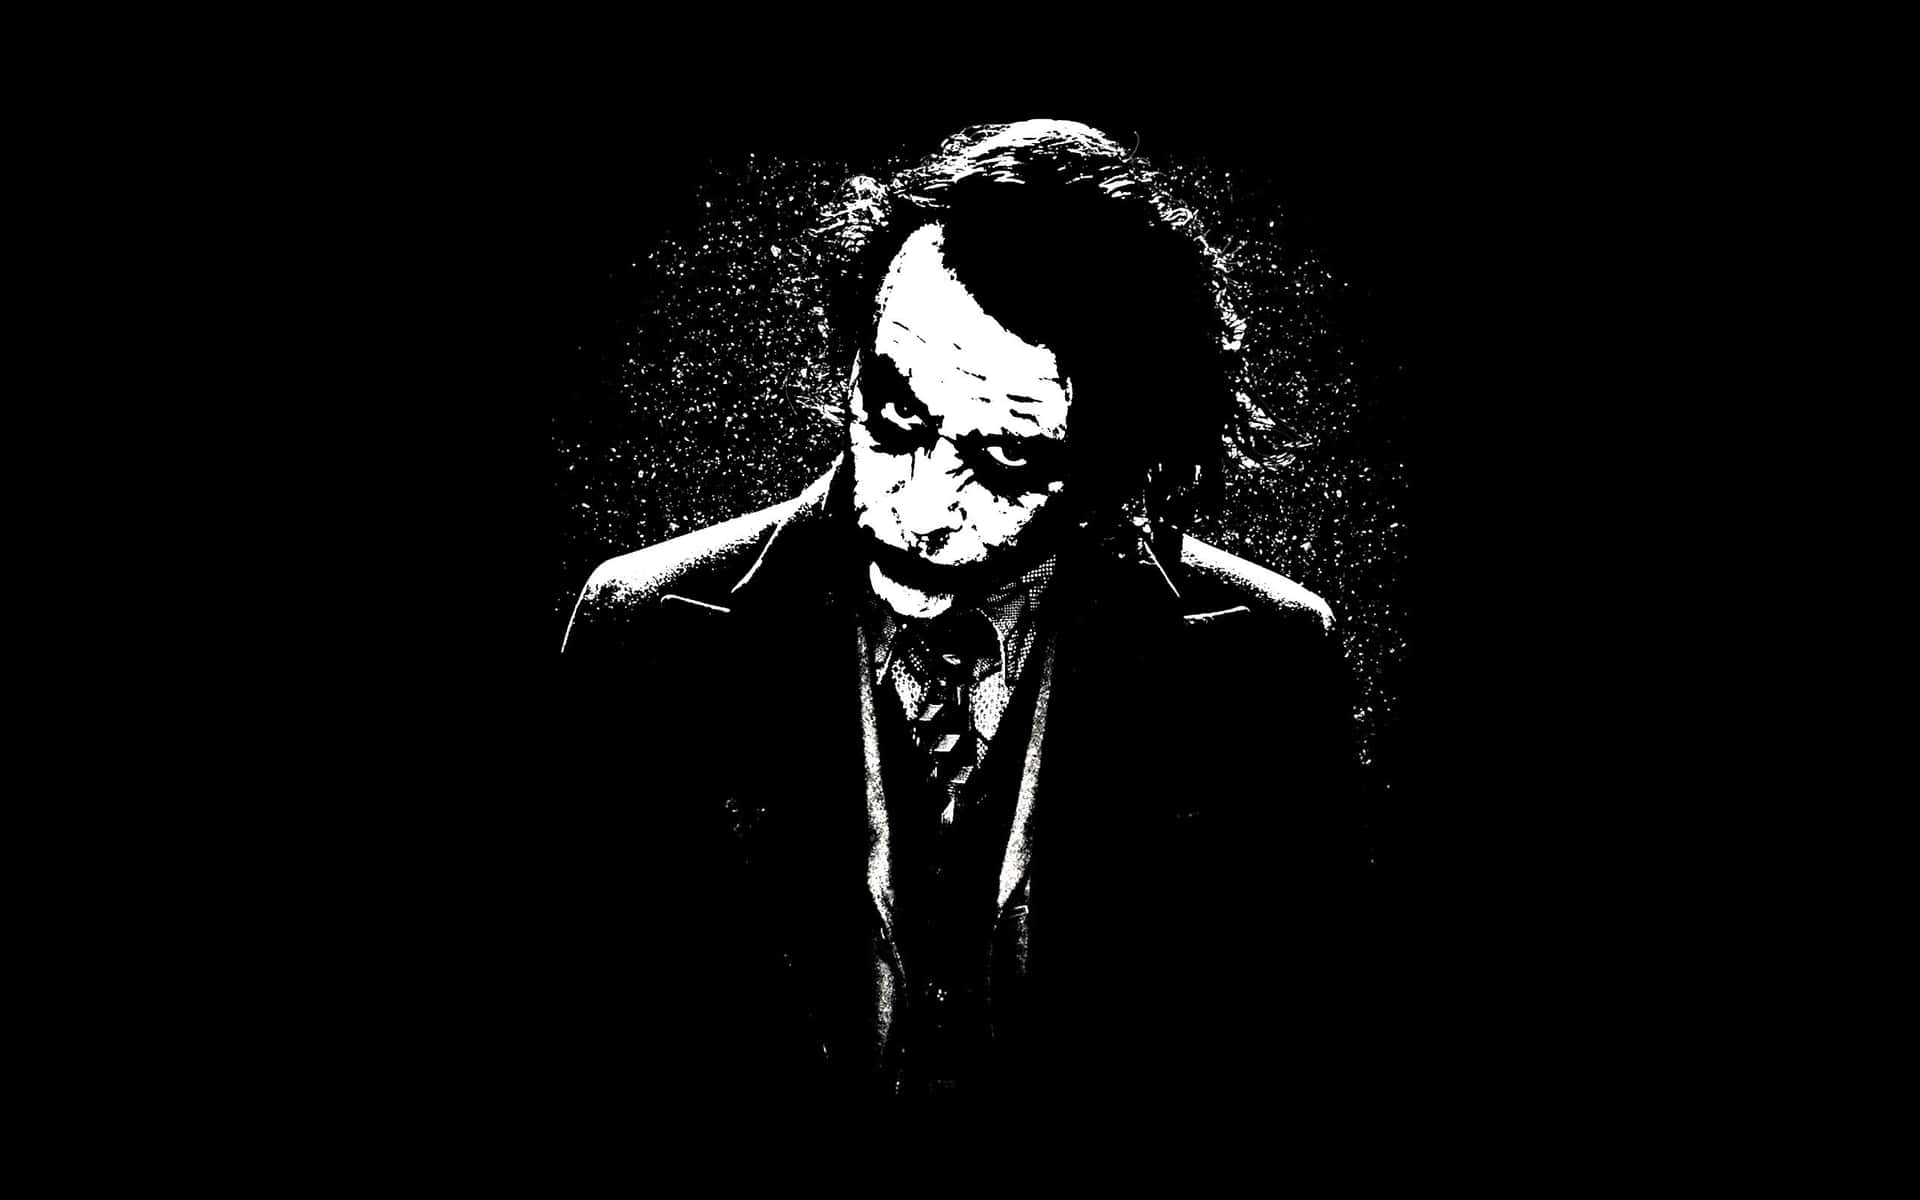 Dynamic Joker Art on a Dark Background Wallpaper